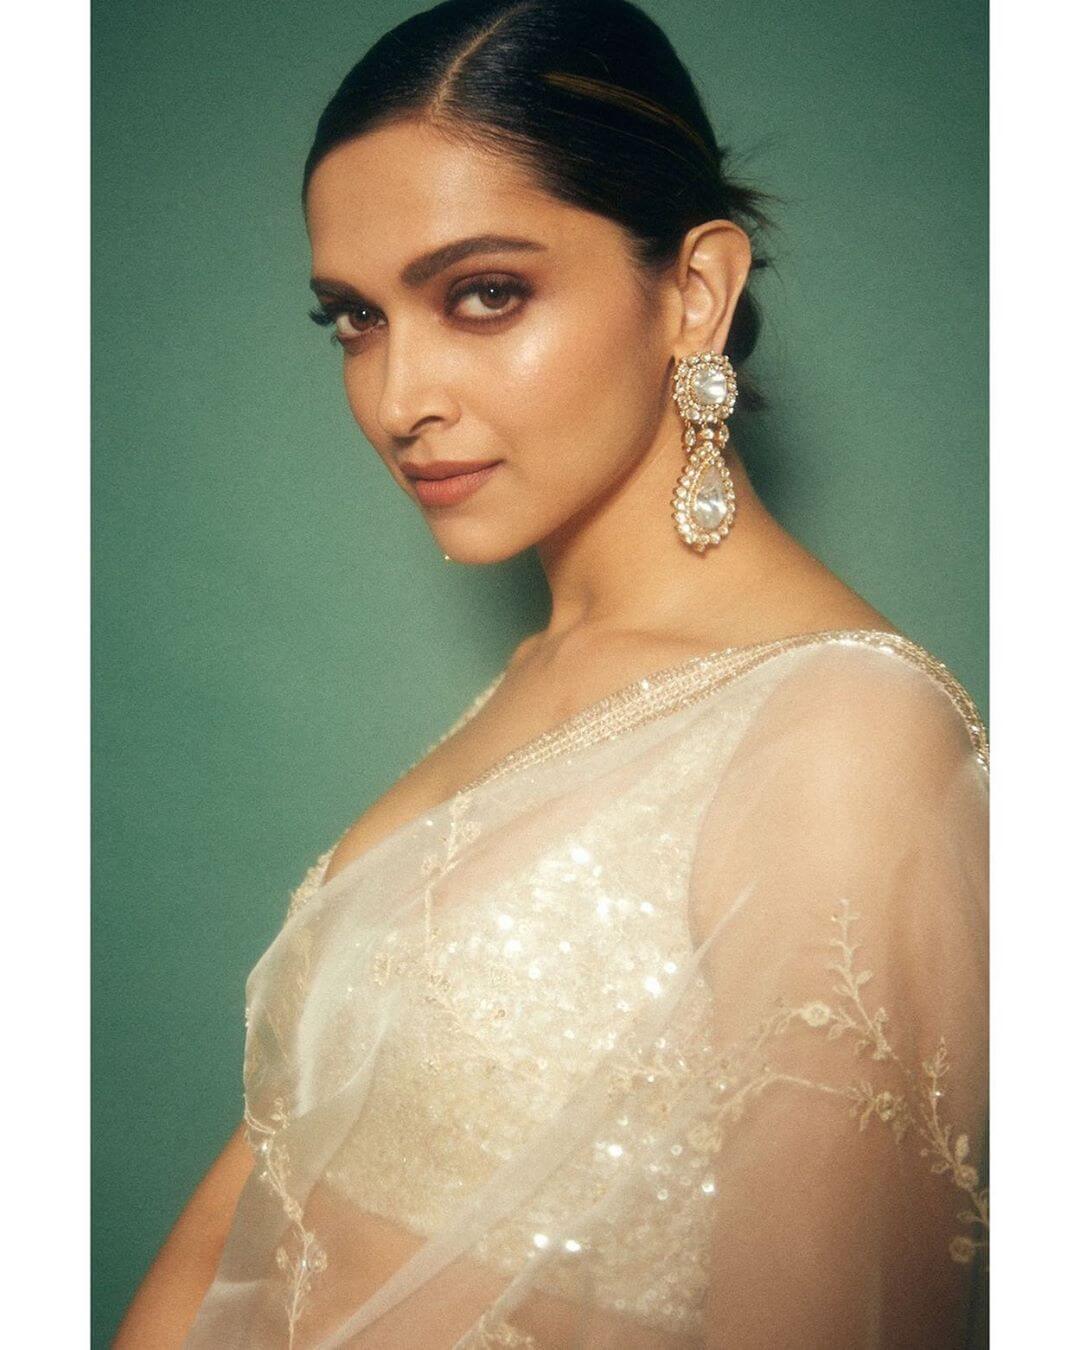 Deepika Padukone’s gold or silver earrings